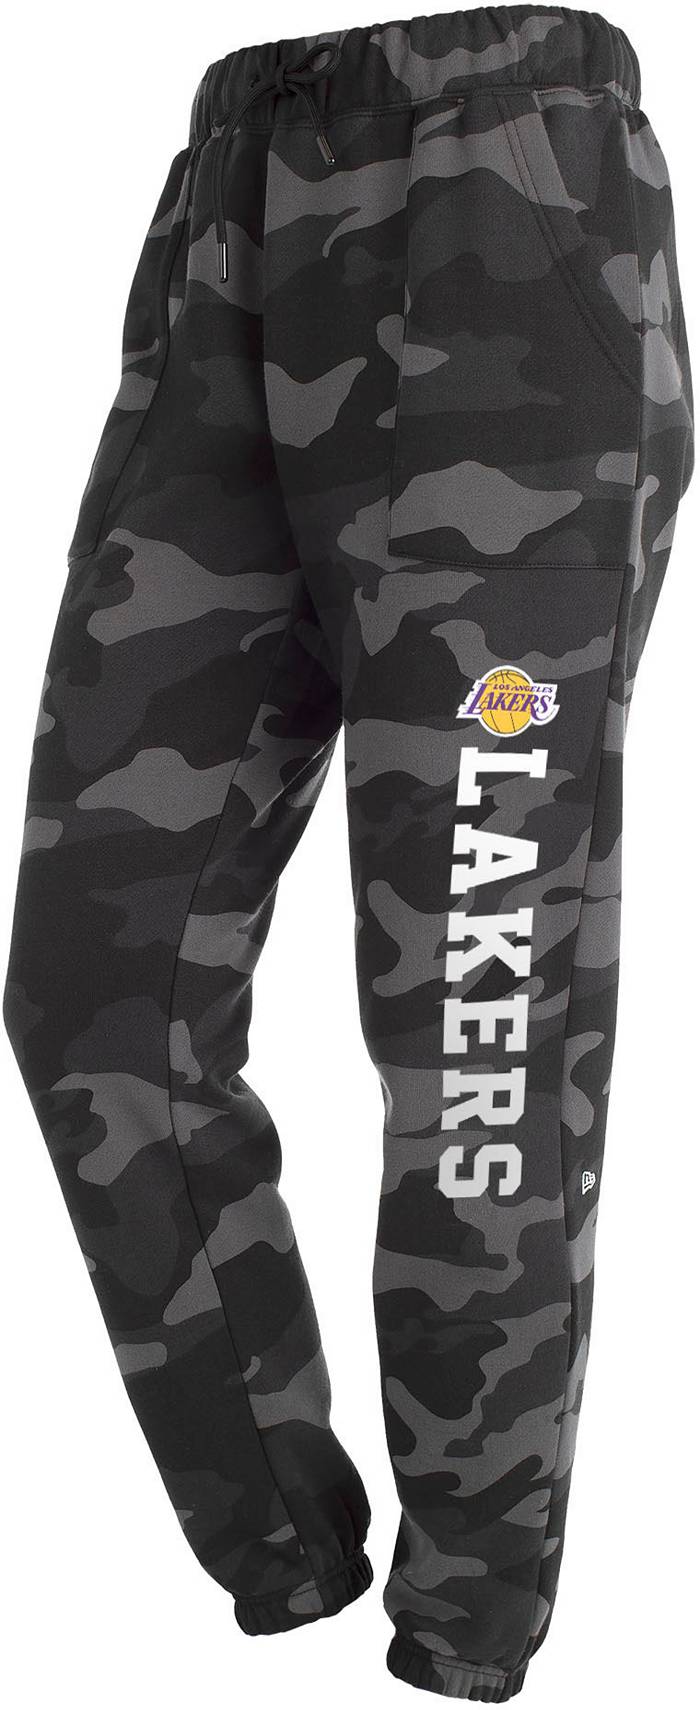 Los Angeles Lakers Joggers, Leggings, Lakers Sweatpants